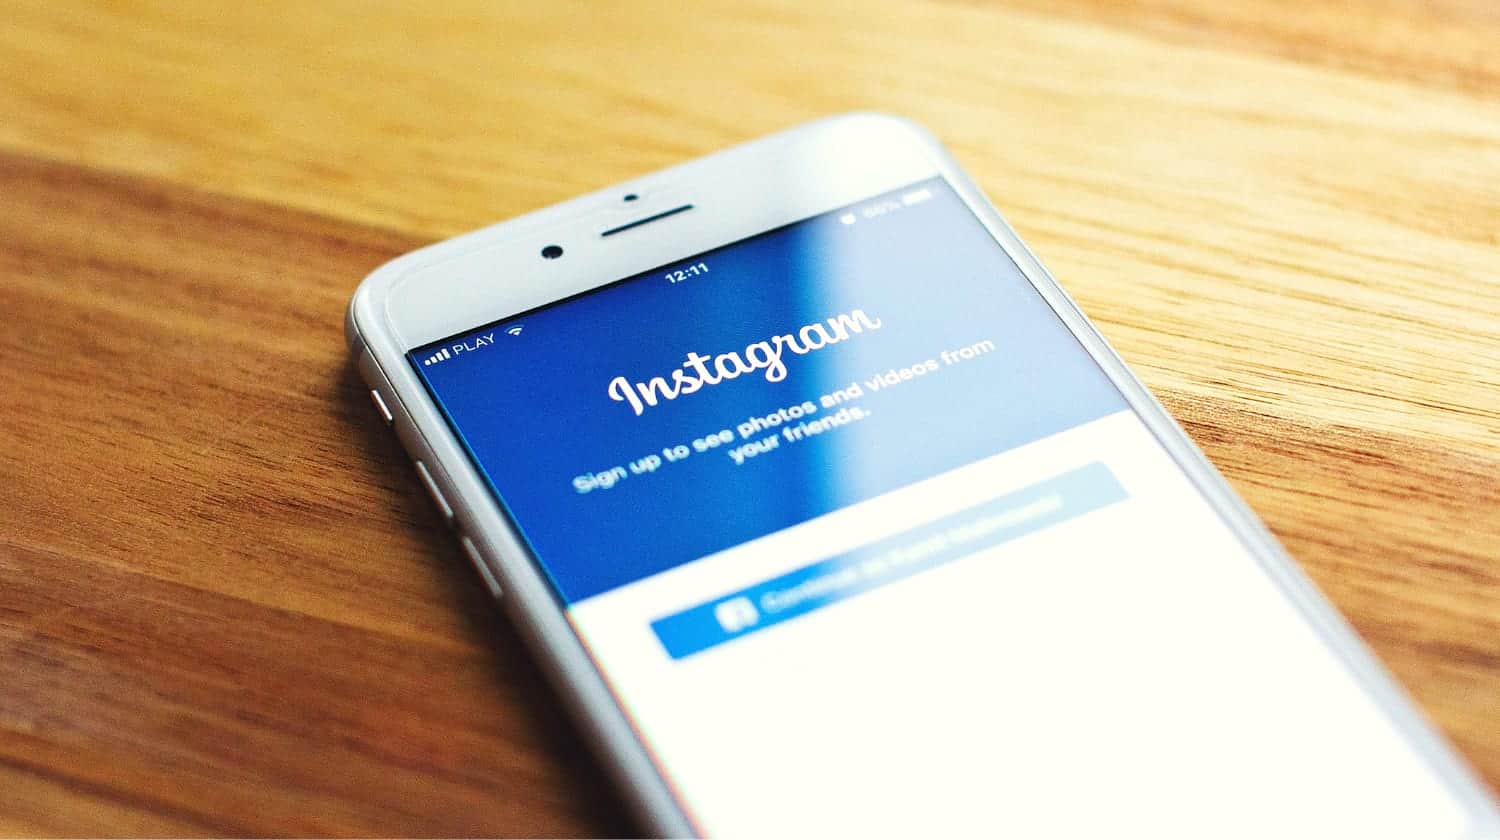 instagram login homepage smartphone |Feature | How To Delete An Instagram Account | Noobie | delete your account | Instagram account disabled | how to deactivate Instagram account permanently